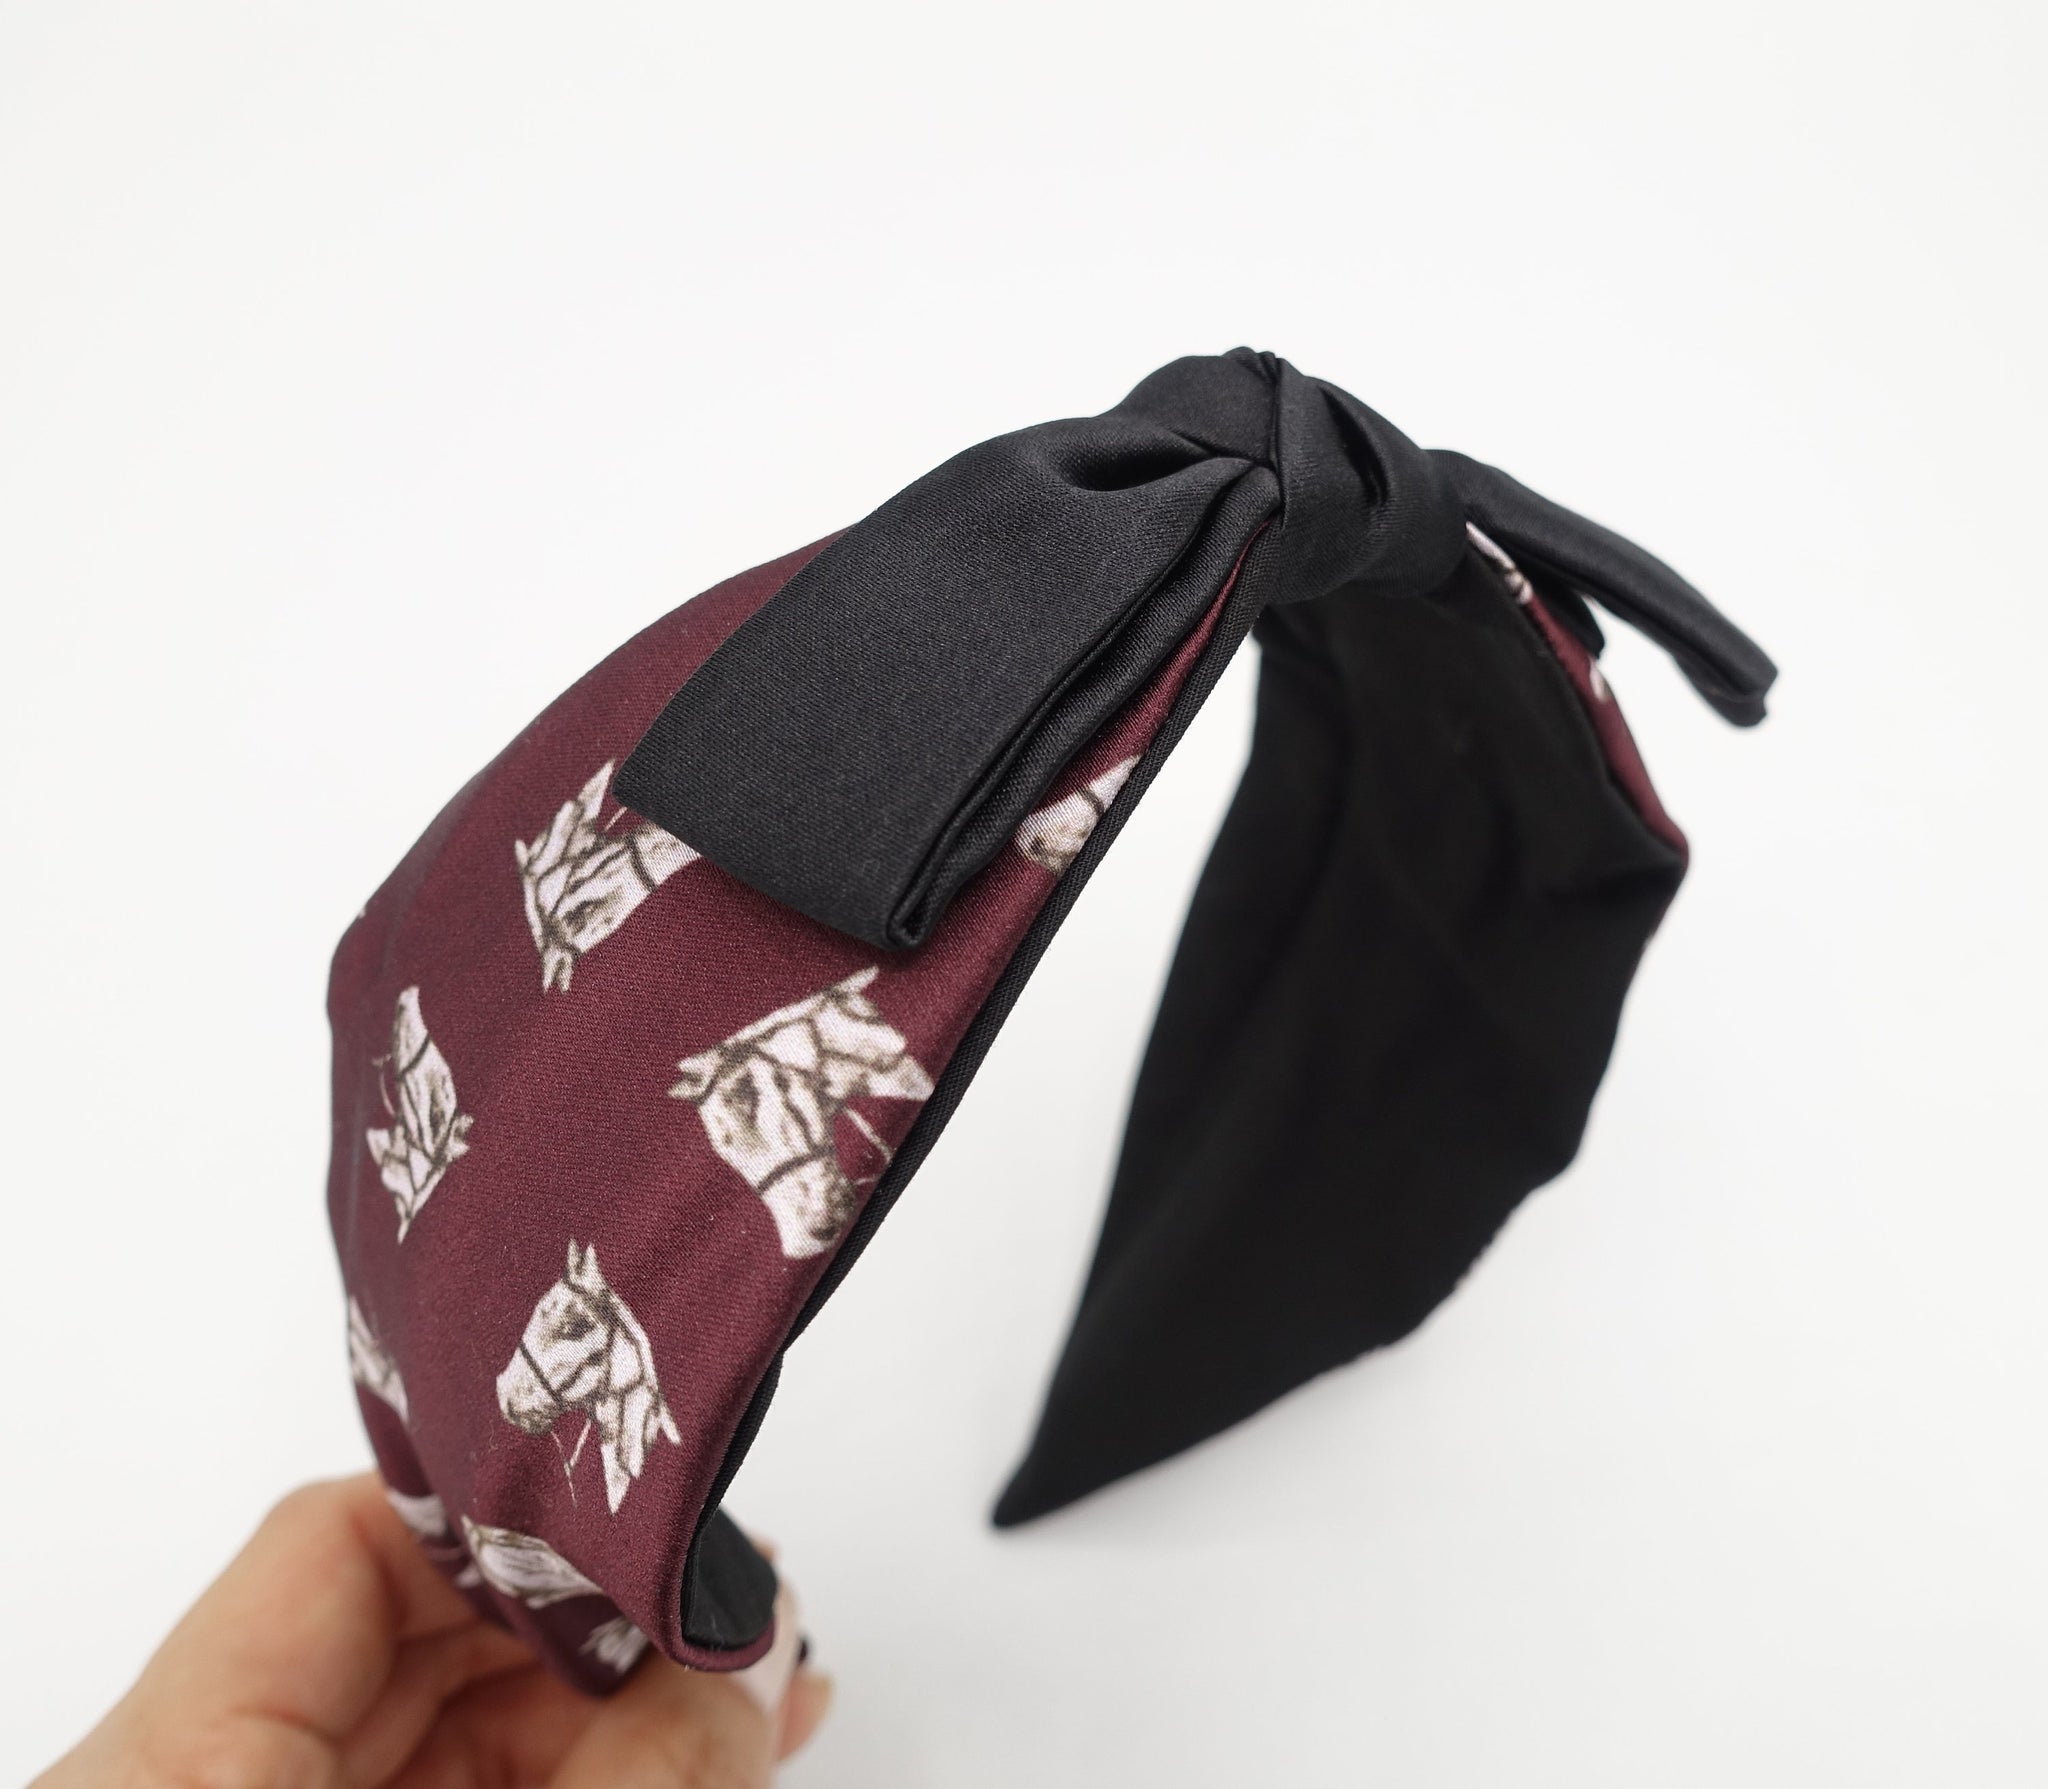 VeryShine horse print satin bow knot headband hair accessory for women